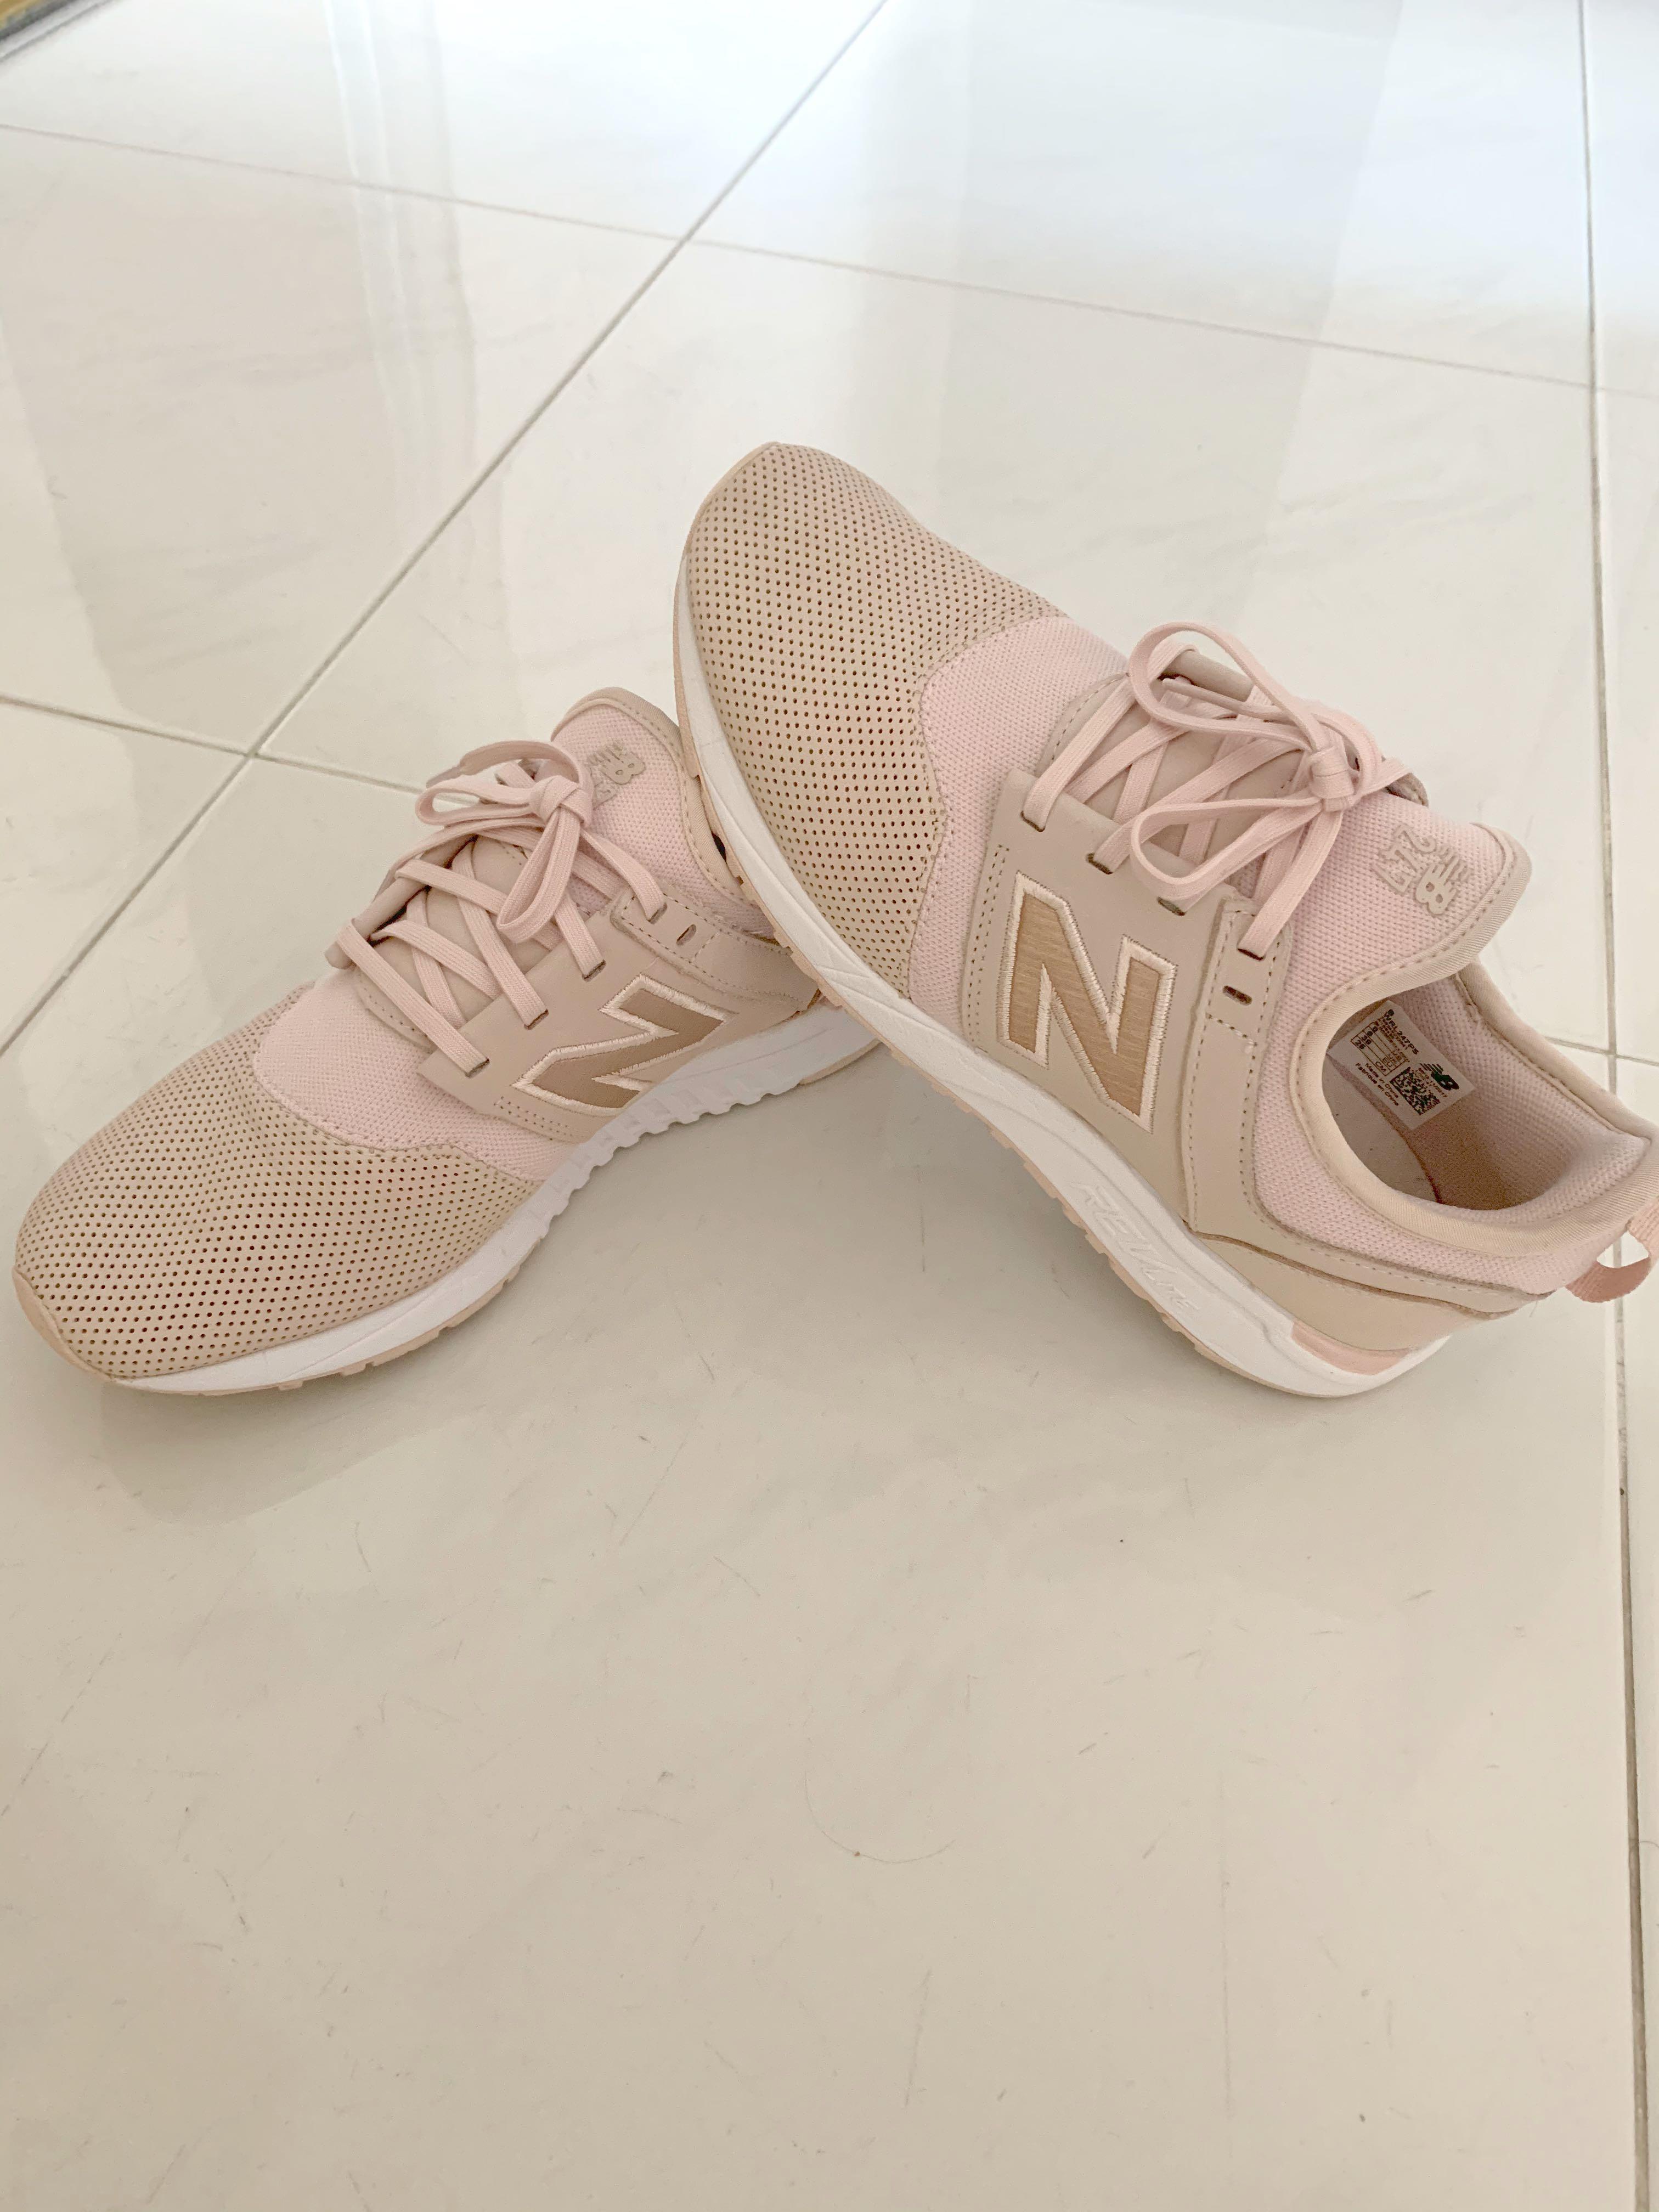 blush new balance sneakers